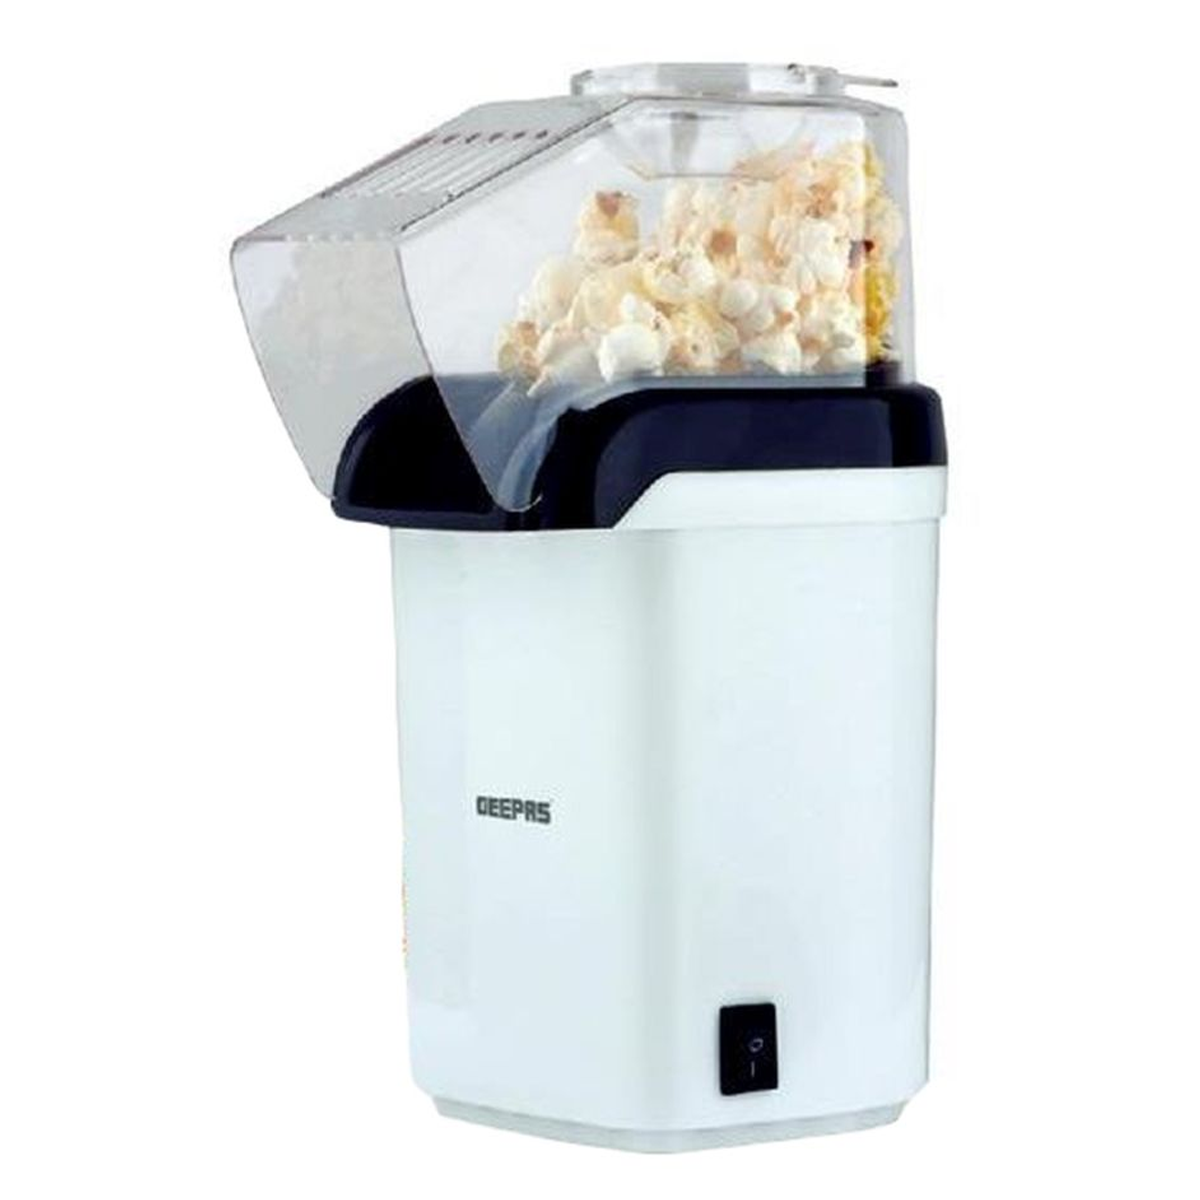 Geepas Portable Popcorn Maker 1200W GPM840 - White